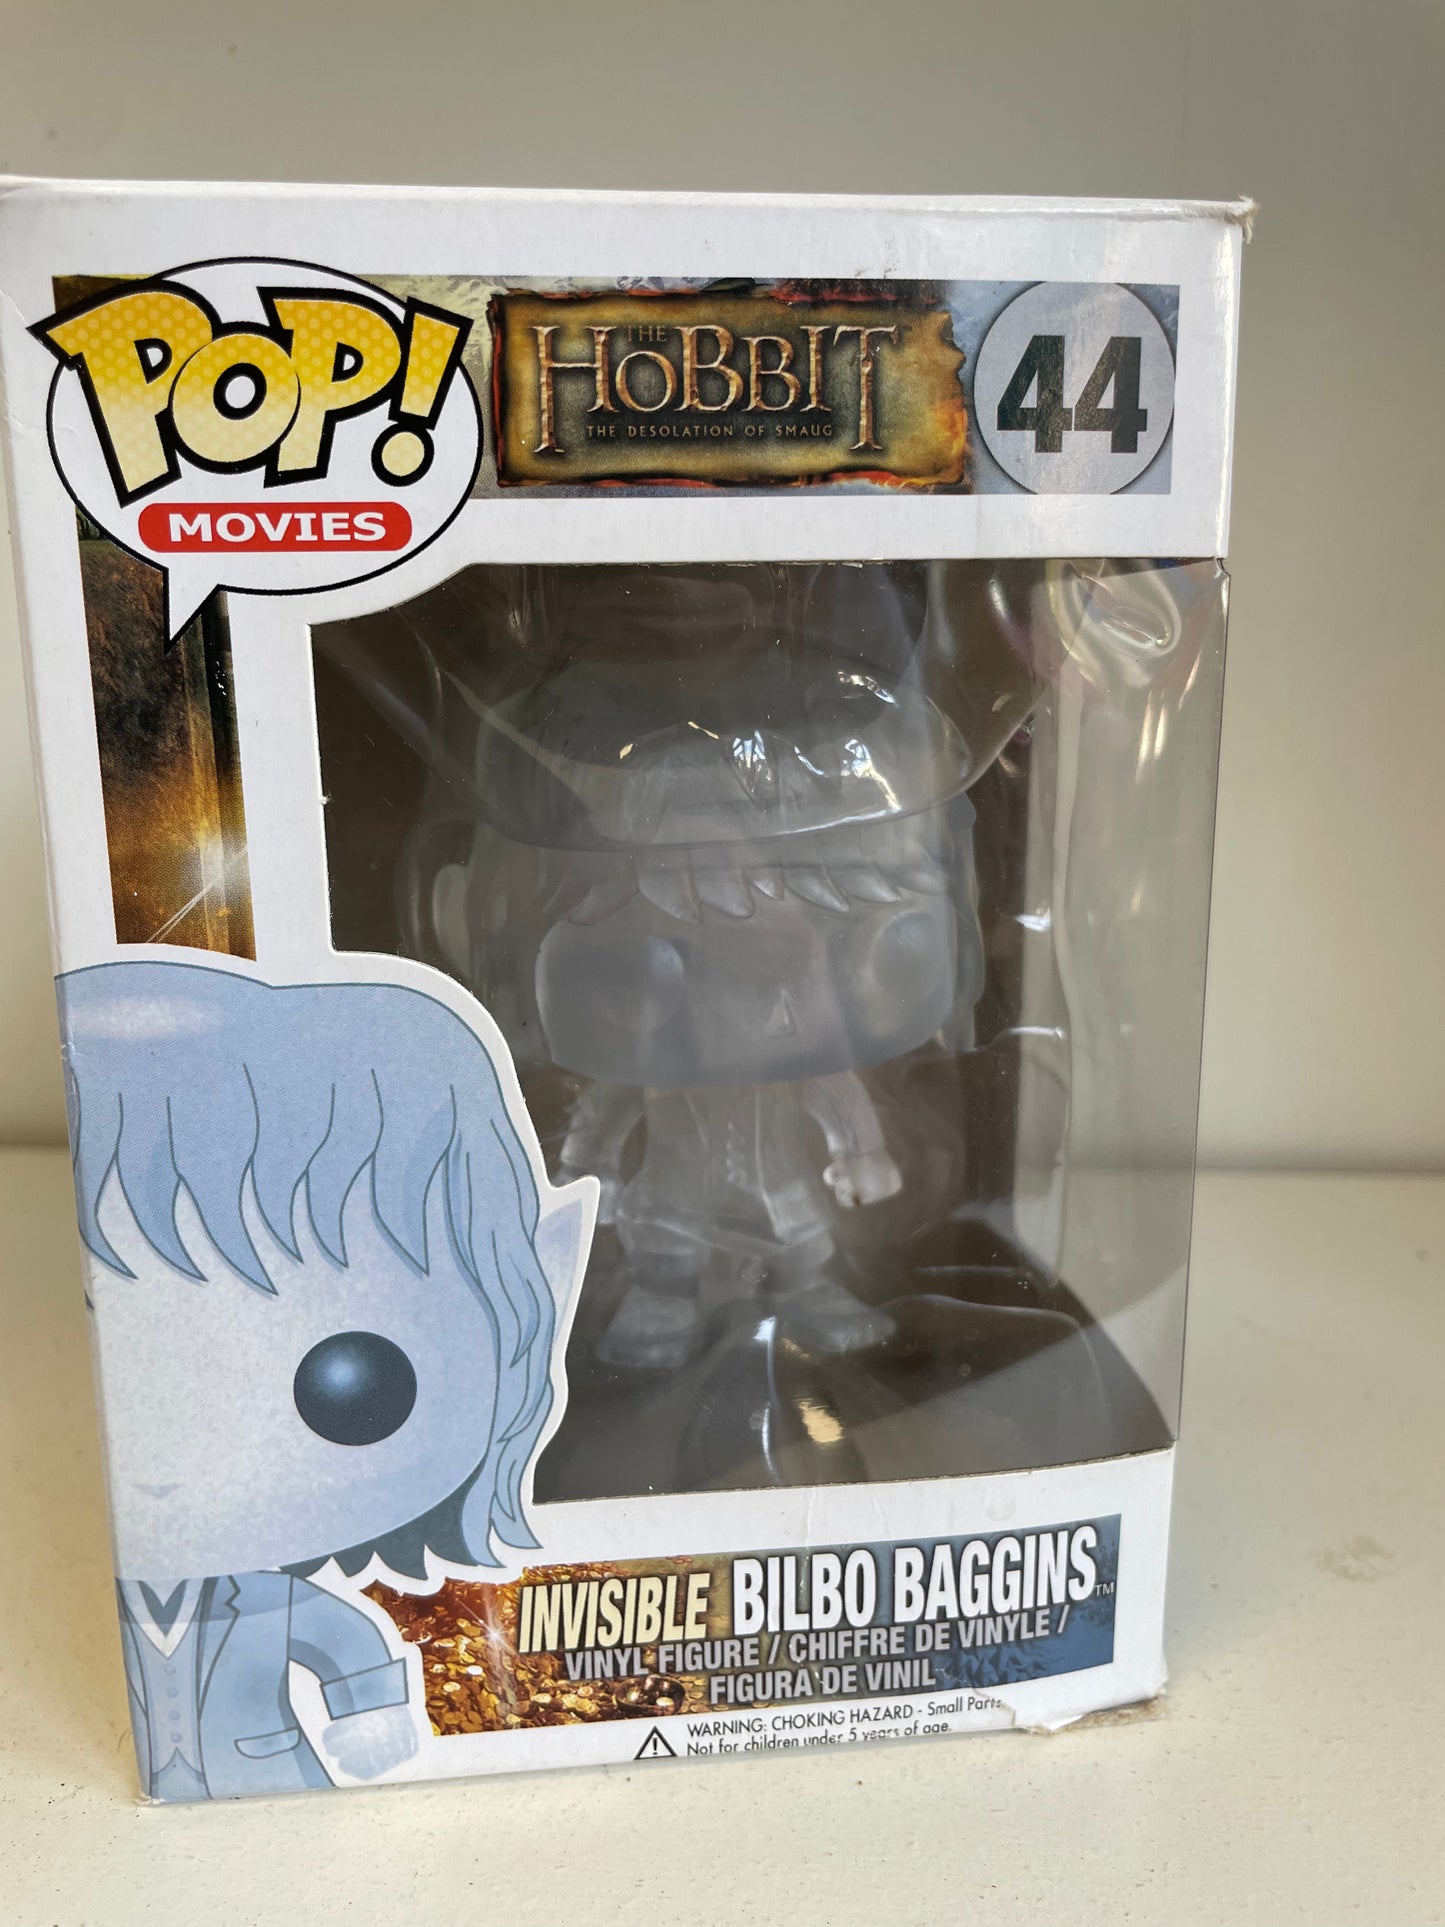 Funko Pop Invisible Bilbo Baggins Damaged Package